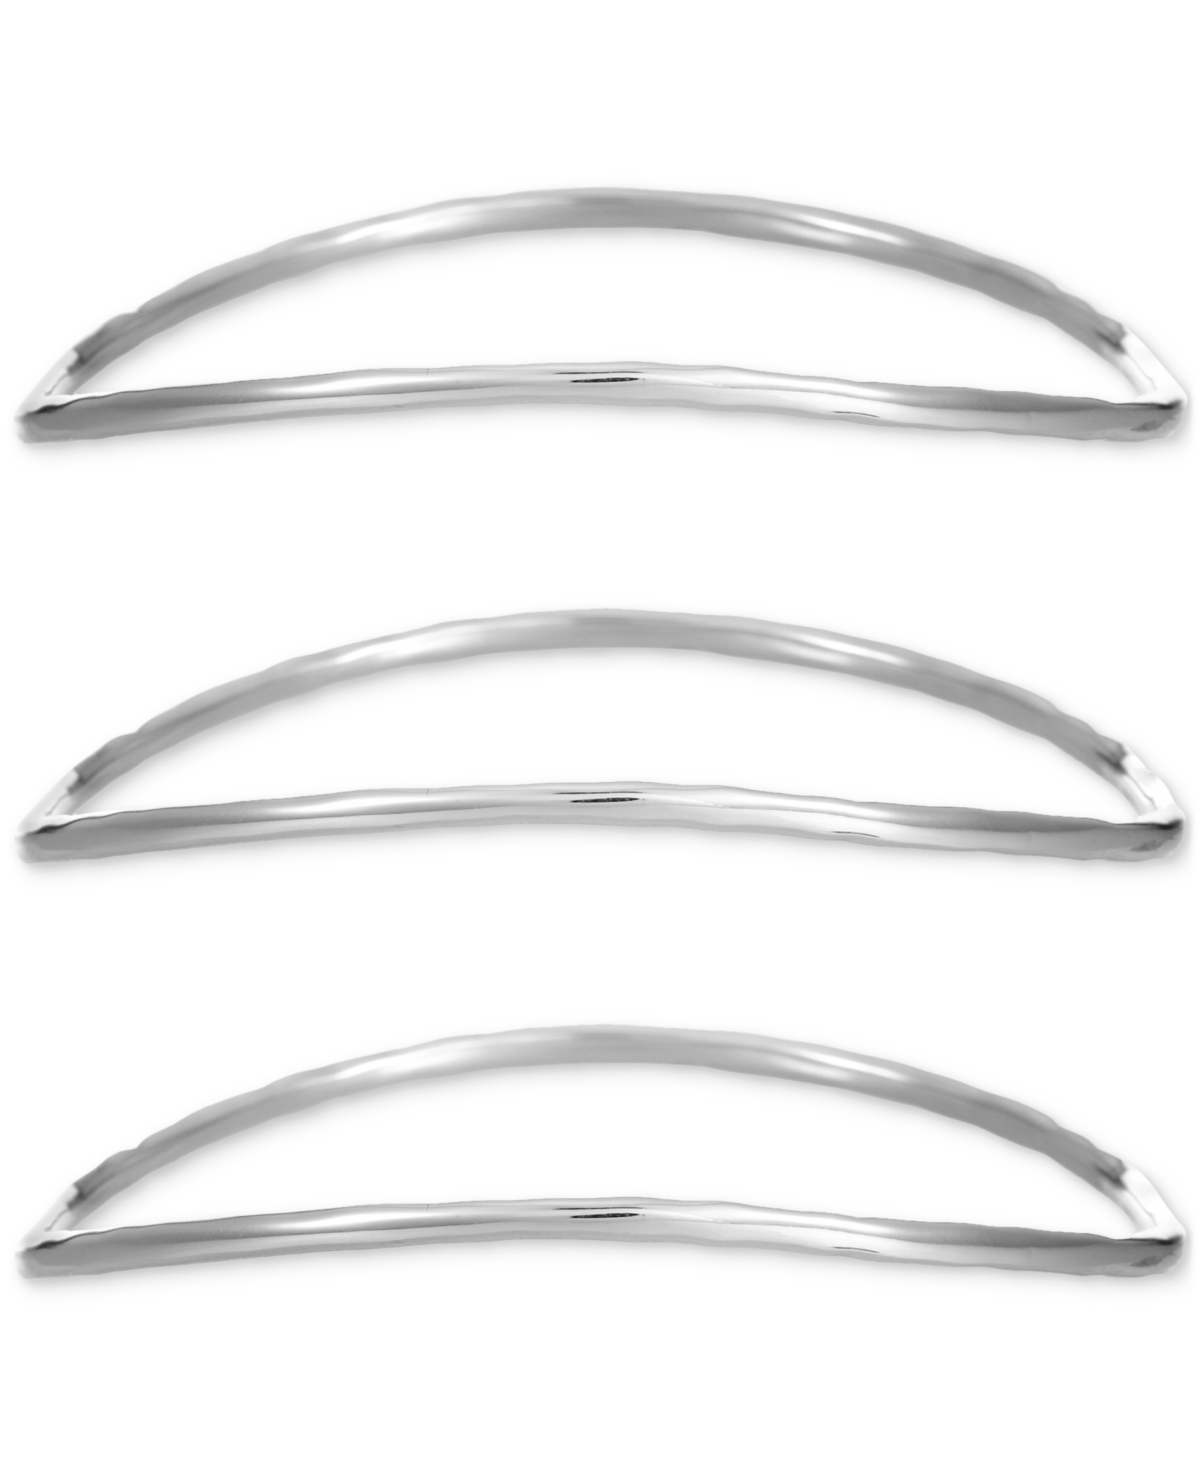 Silver-Tone 3-Pc. Set Twist Bangle Bracelets, Created for Macy's - Silver